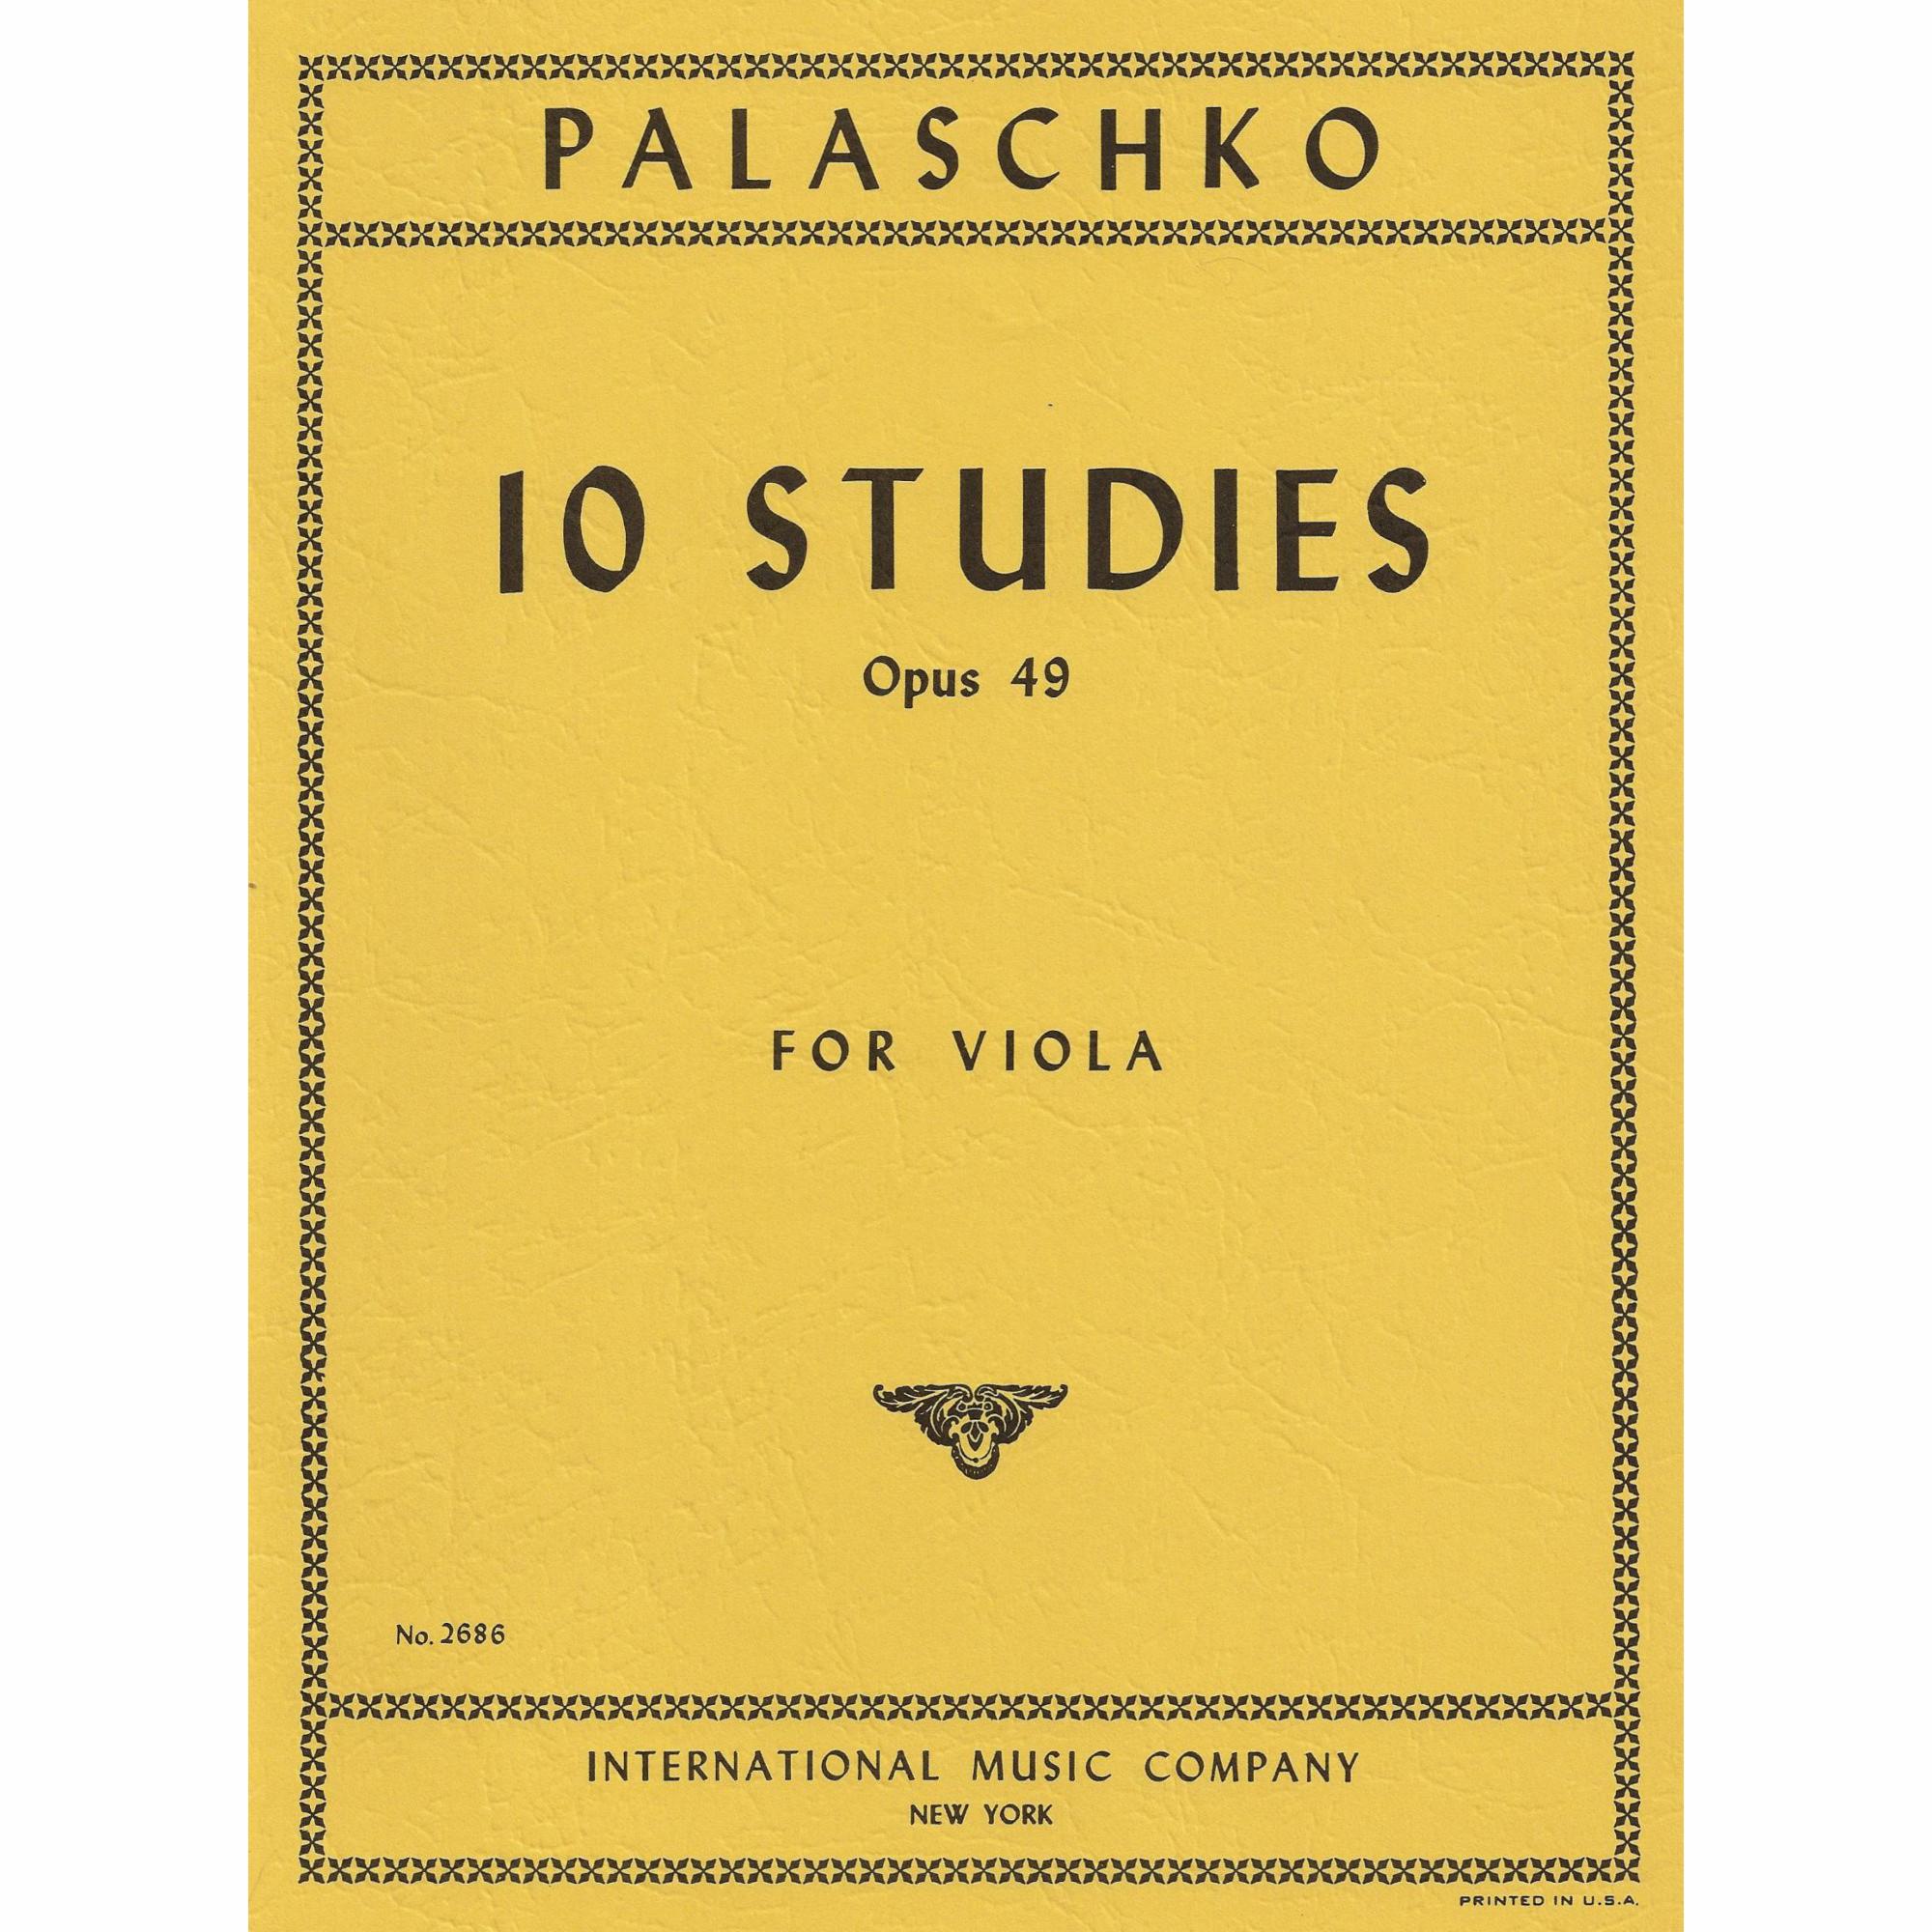 Palaschko -- 10 Studies, Op. 49 for Viola